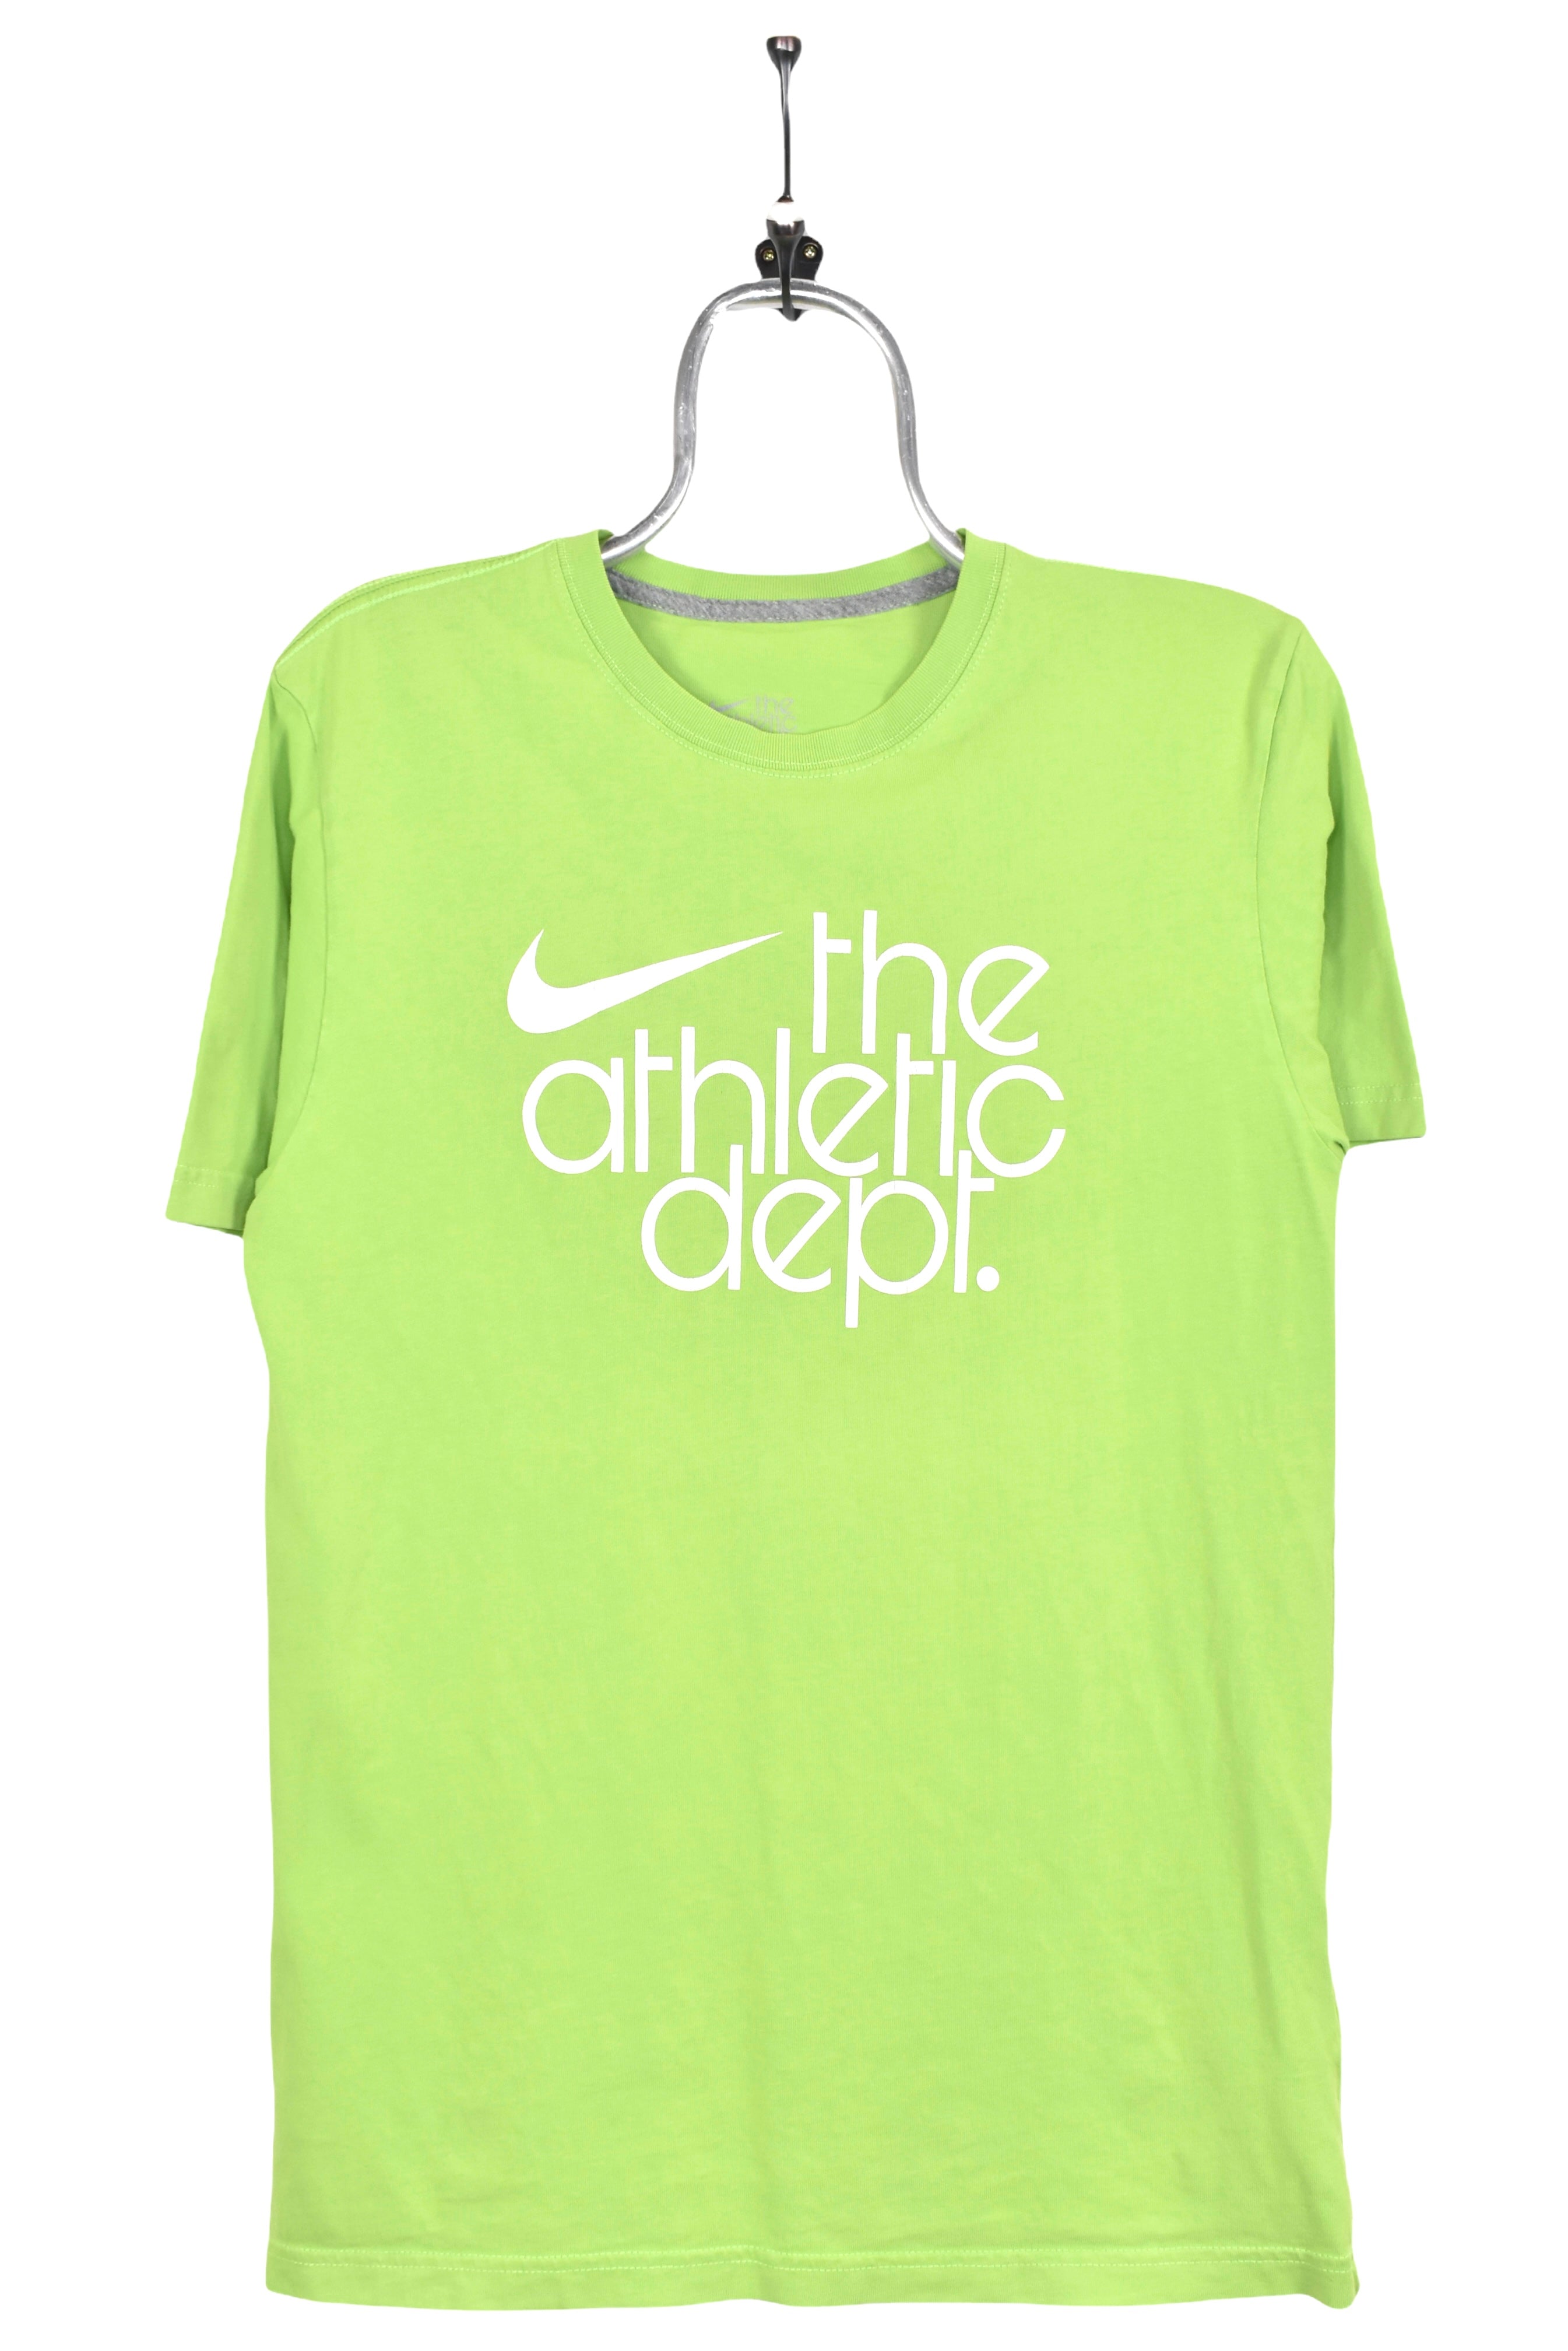 Women's modern Nike shirt, green graphic tee - AU M NIKE